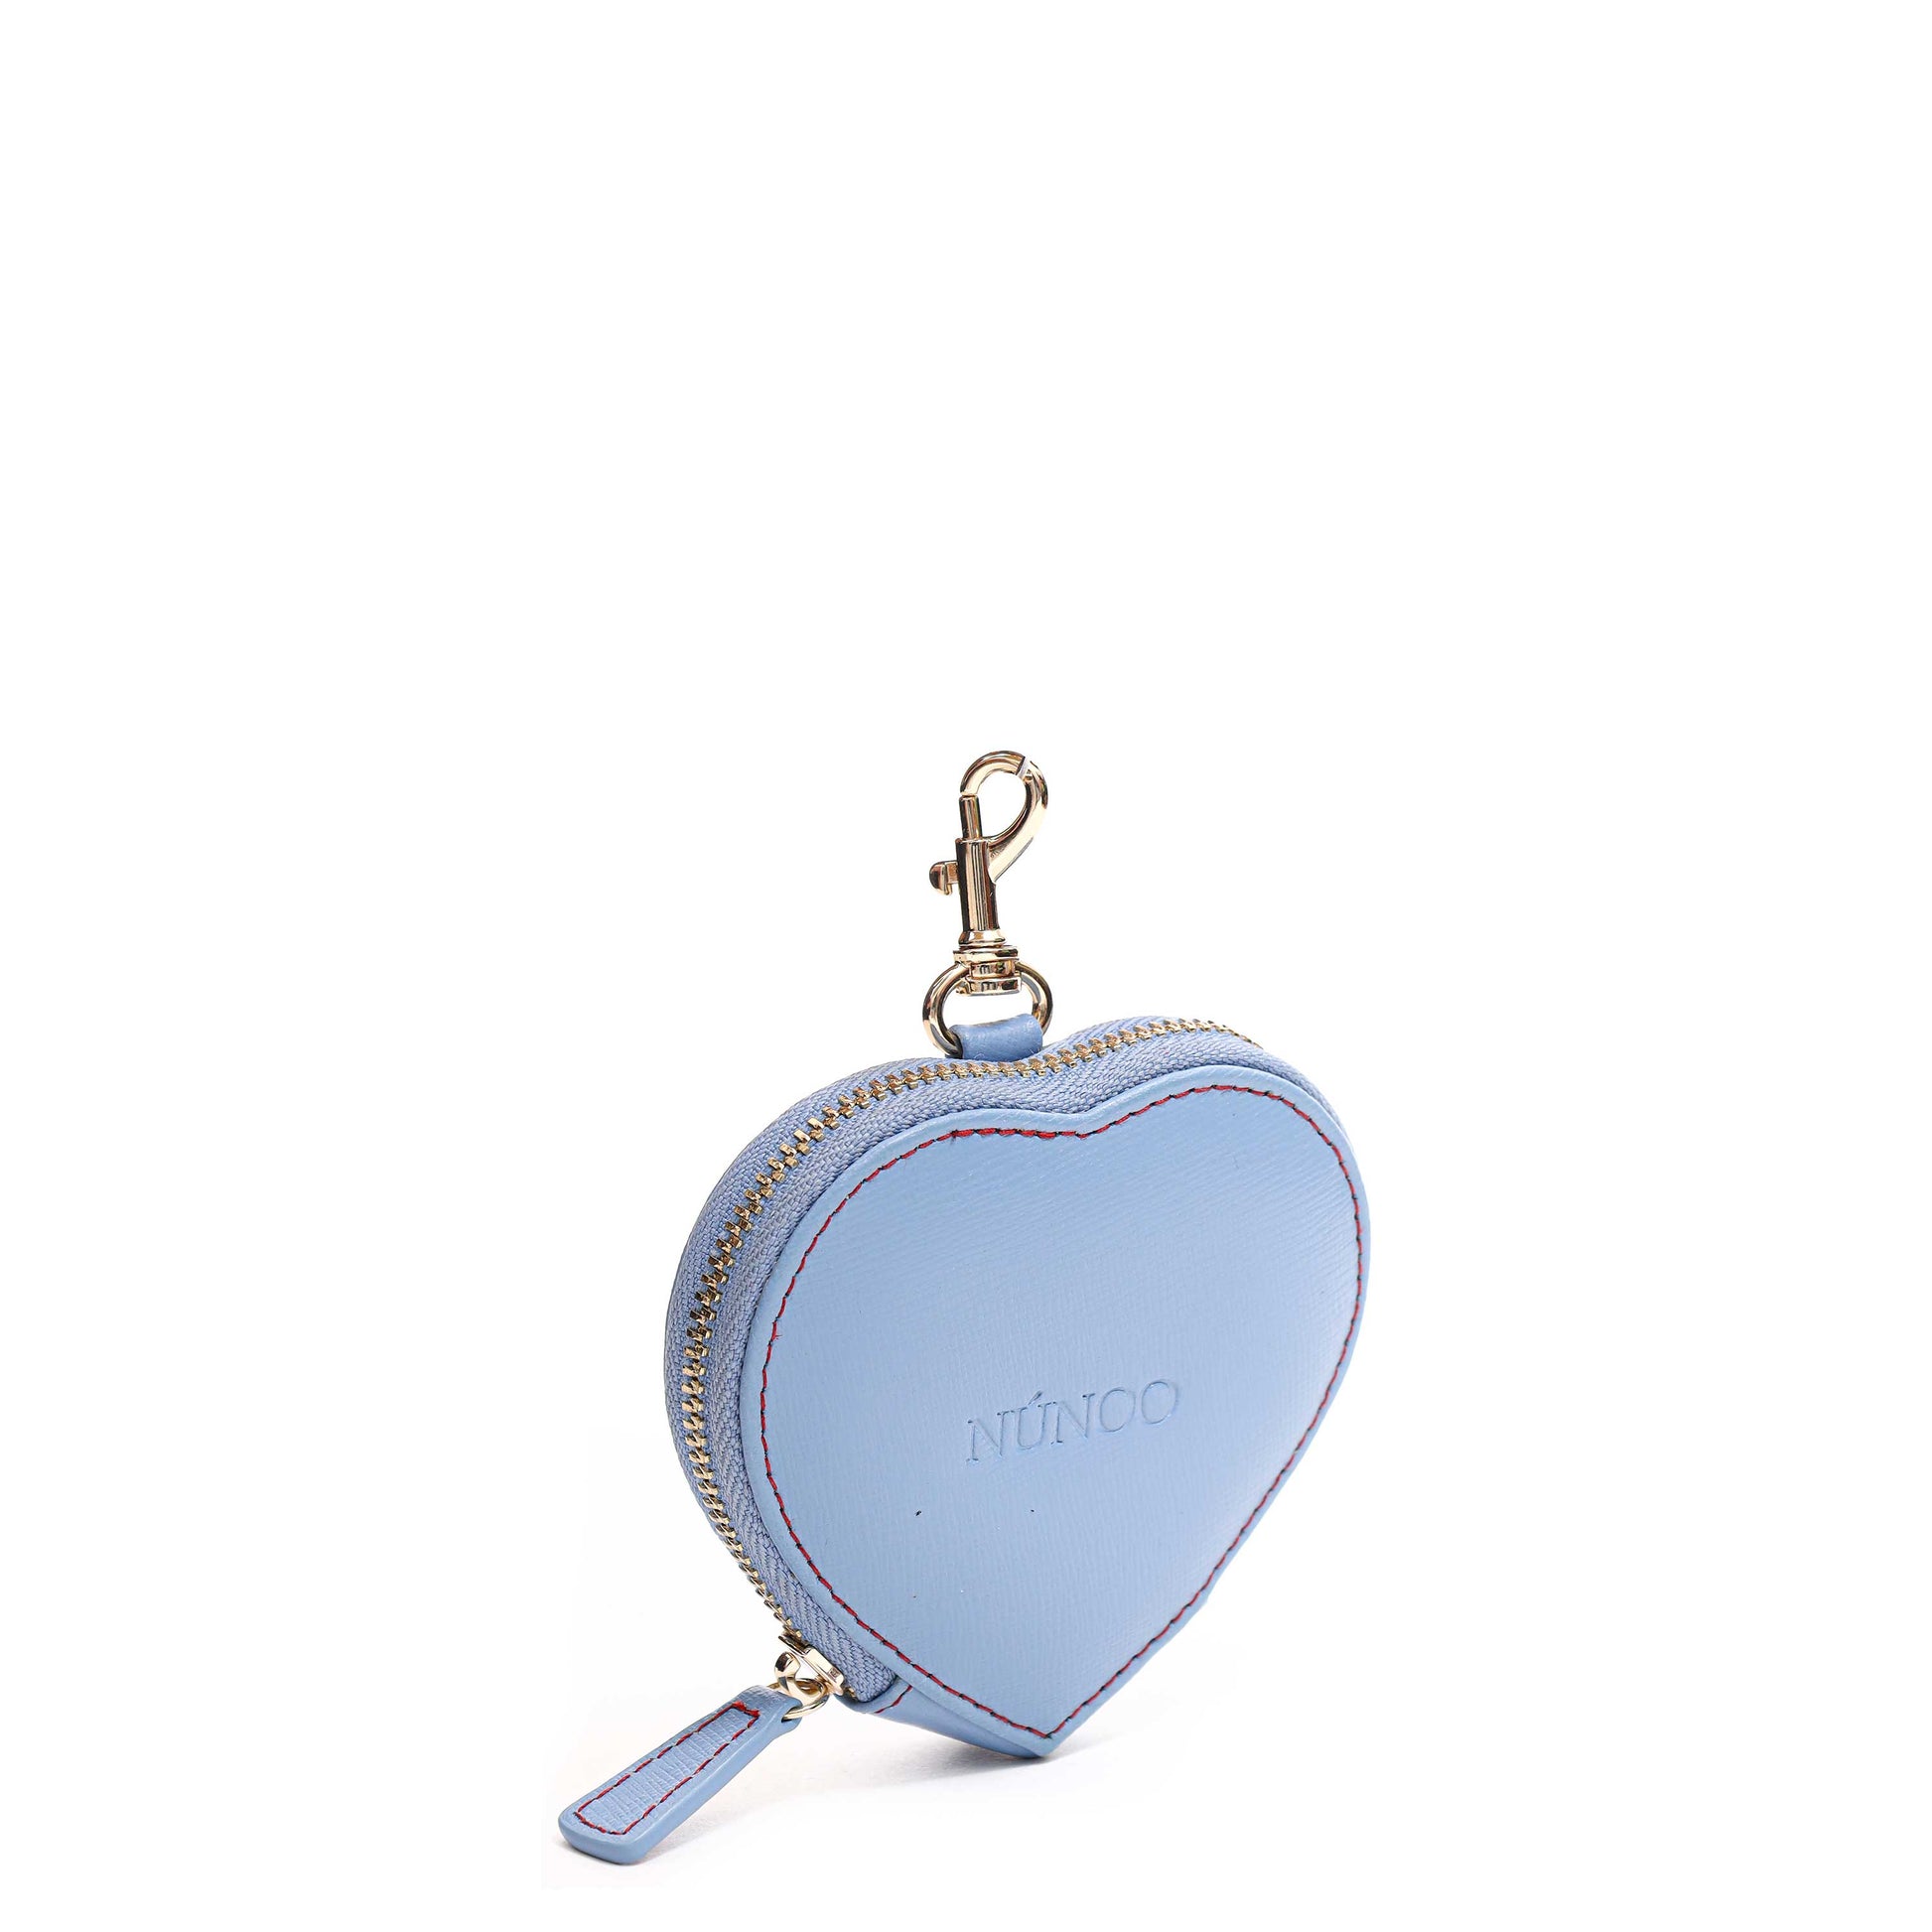 Núnoo Heart Coin Pocket Florence Sea Red Stich w. Gold Wallet Light blue